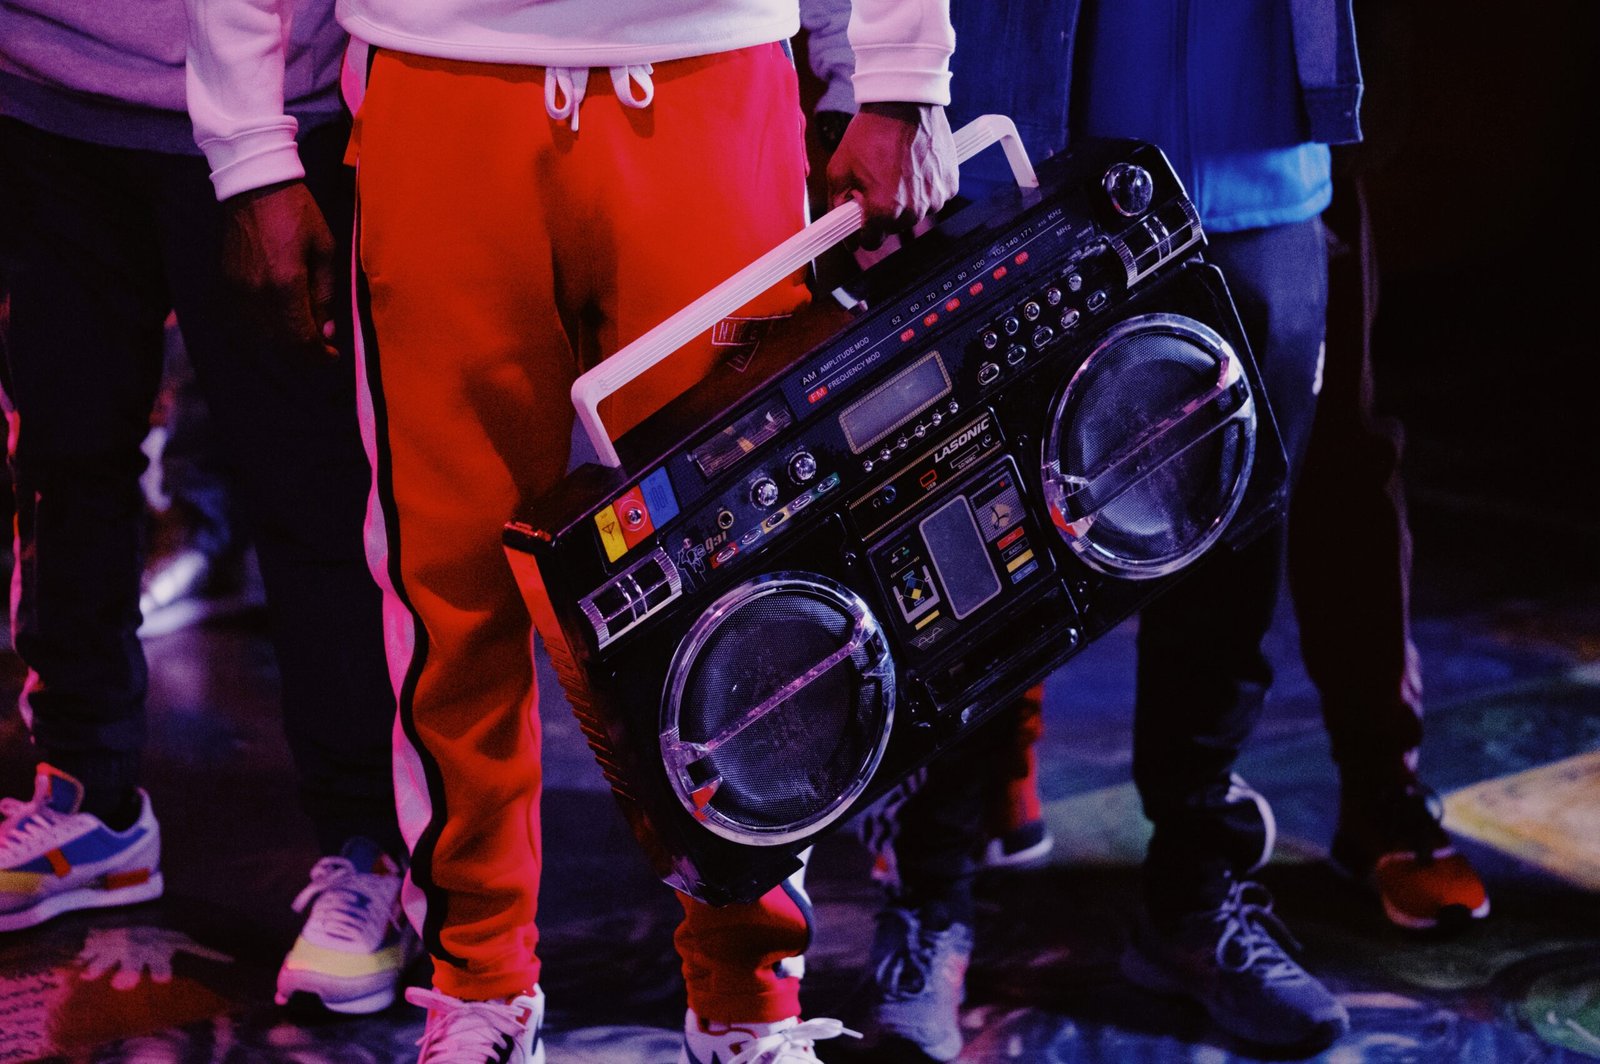 man in red jacket holding black dj controller